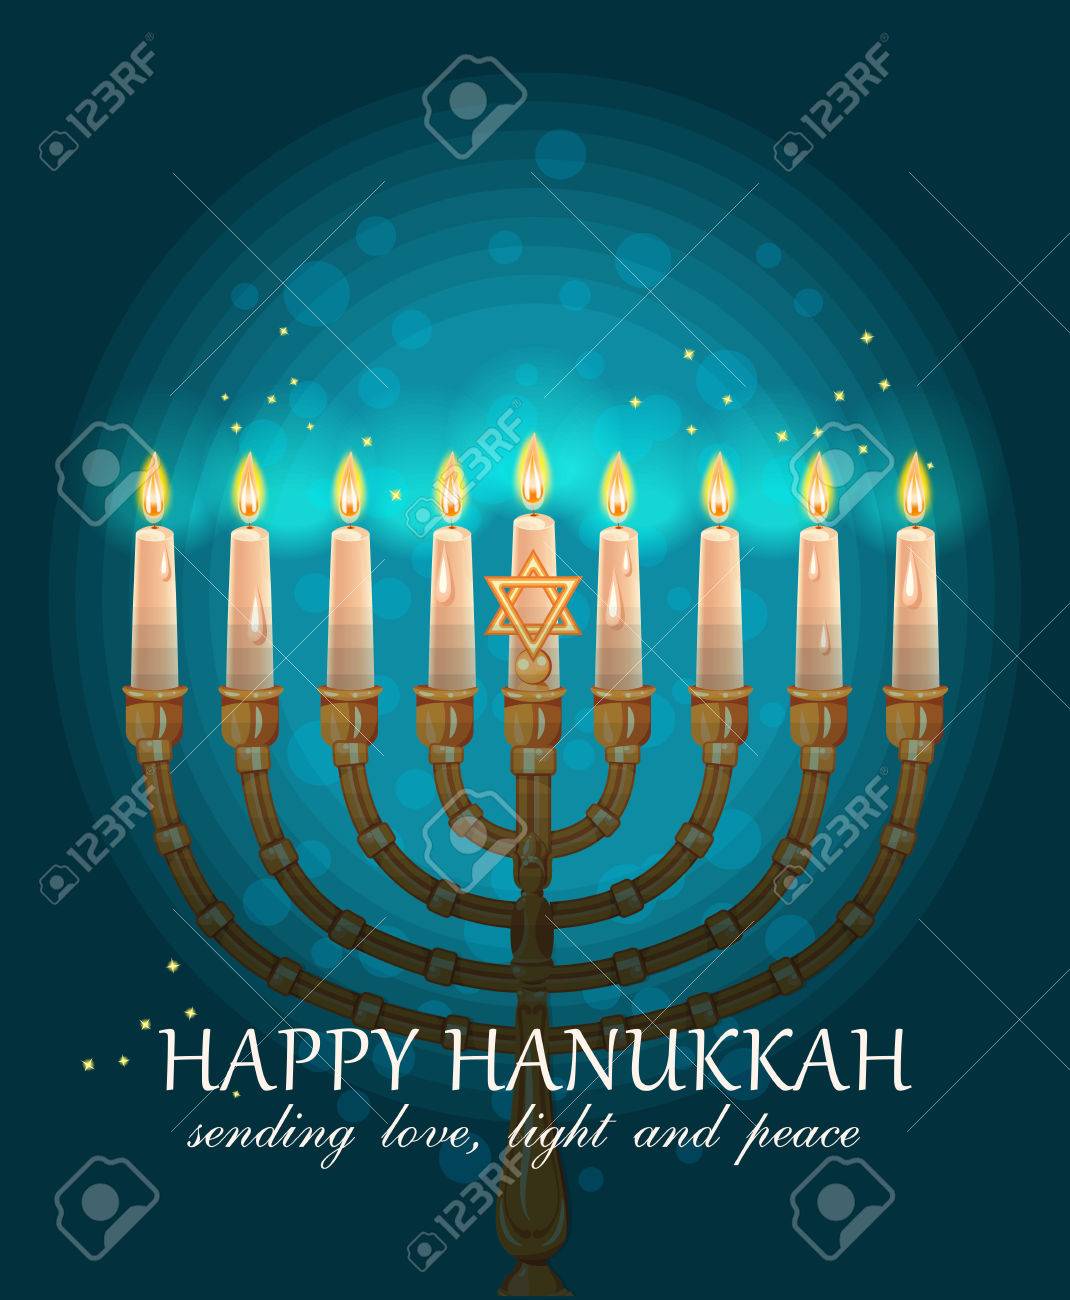 48707985-happy-hanukkah-greeting-card-design-jewish-holiday-vector-illustration.jpg